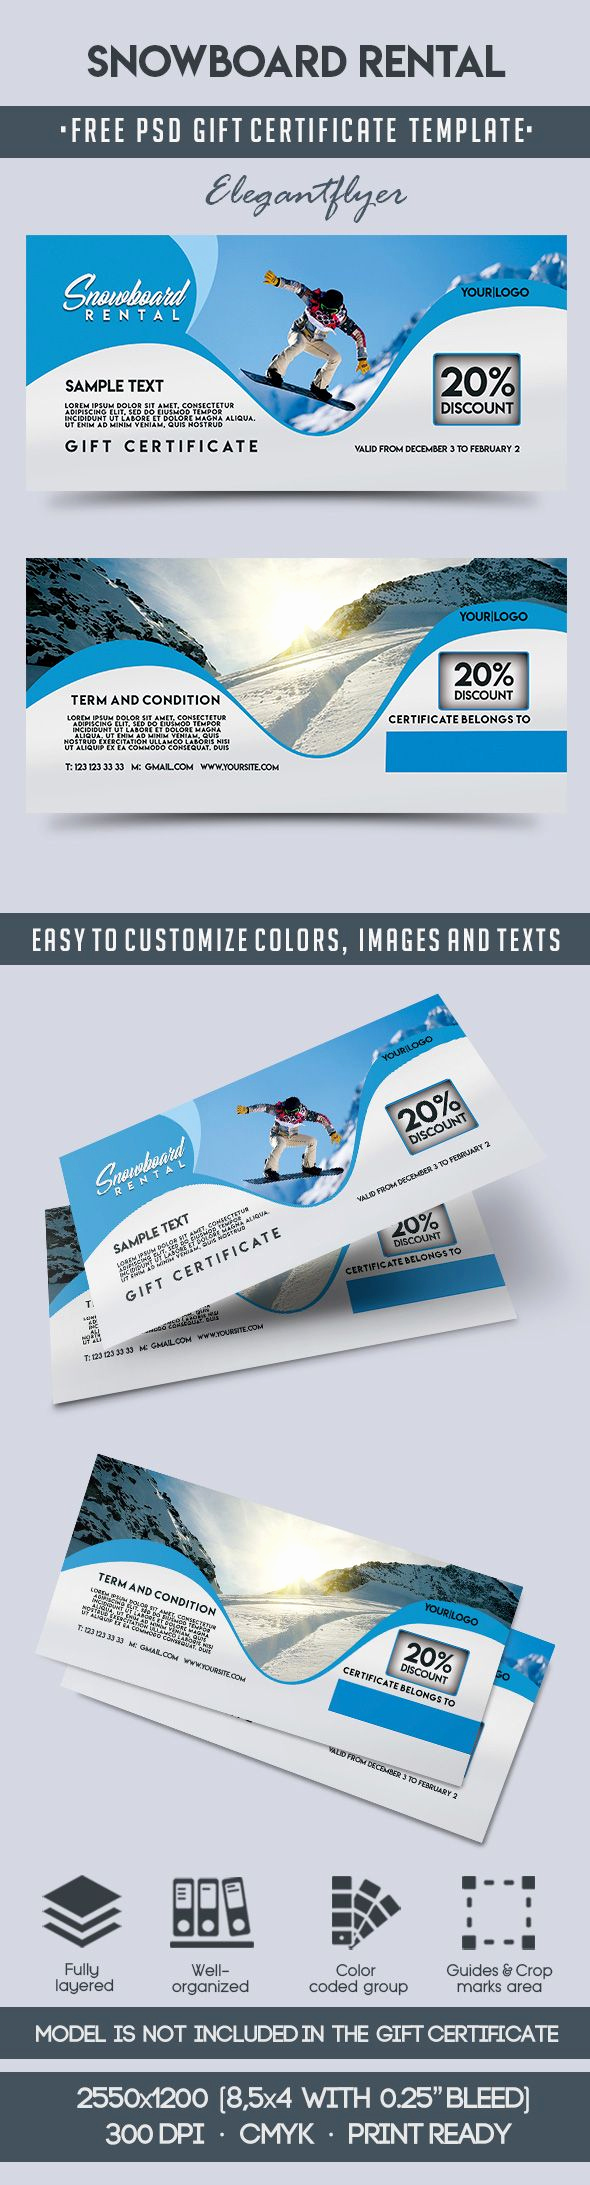 Gift Certificate Template Psd Fresh Free Voucher for Snowboard Rental – by Elegantflyer